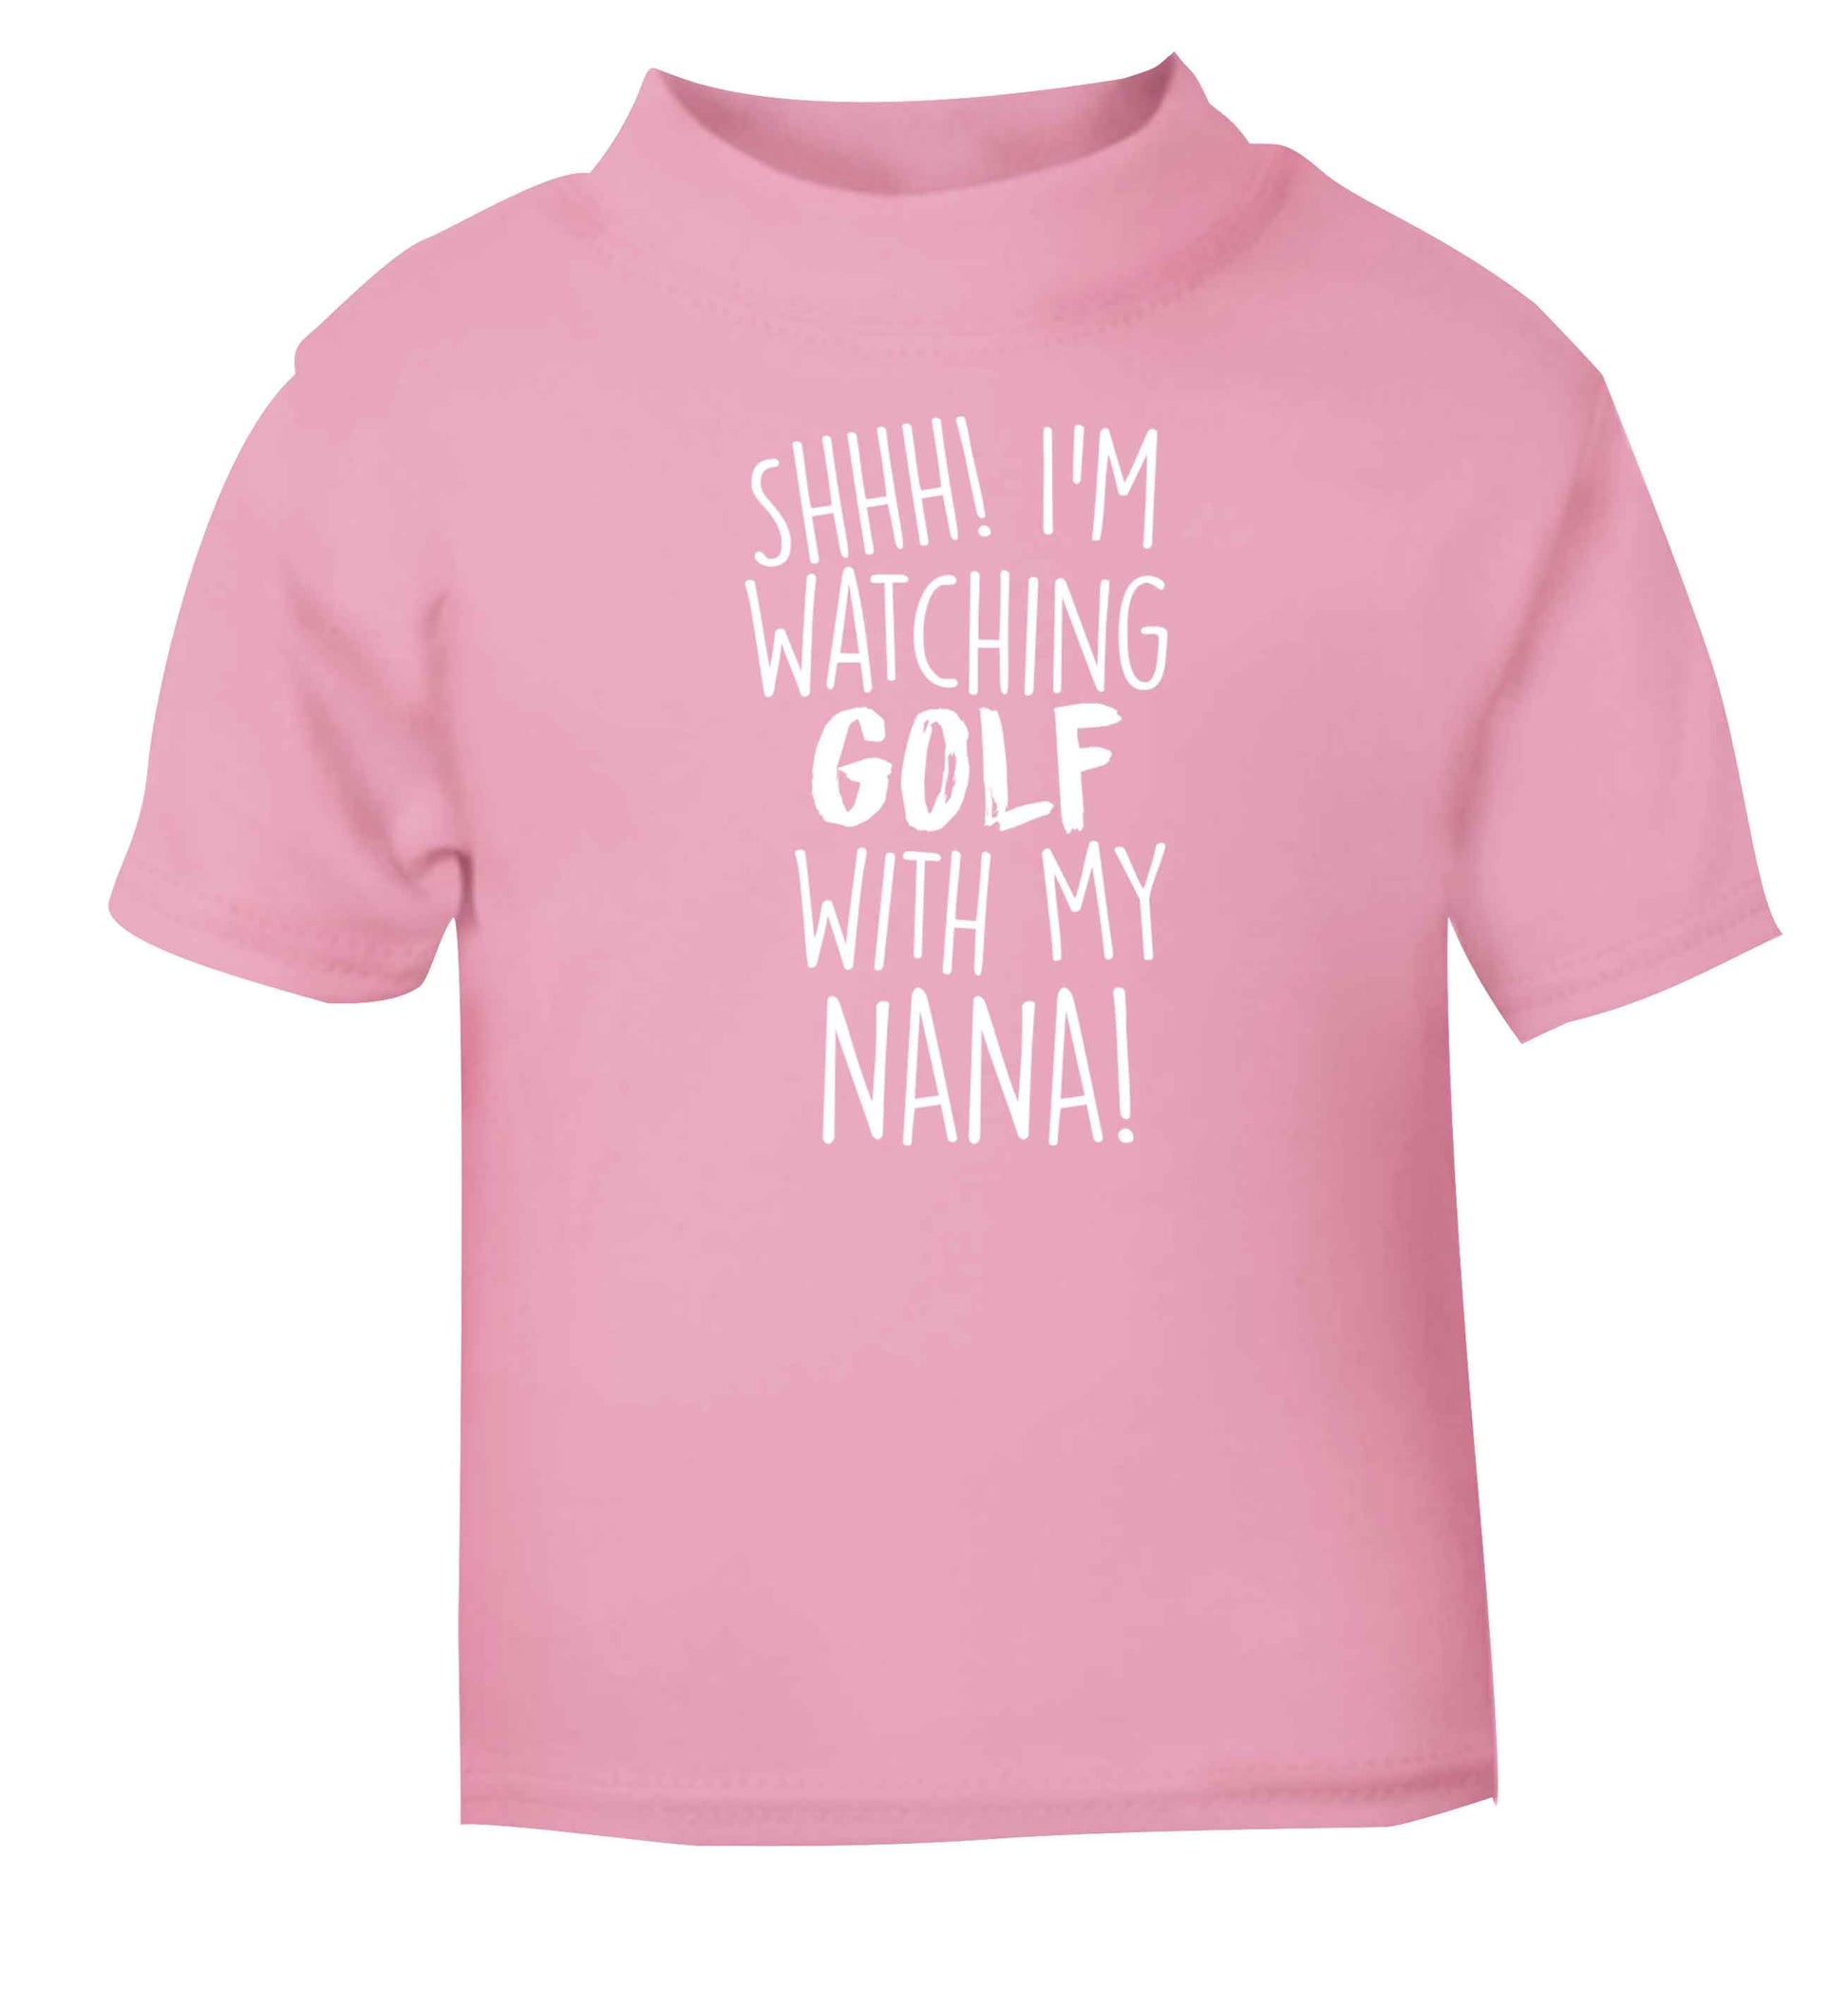 Shh I'm watching golf with my nana light pink Baby Toddler Tshirt 2 Years